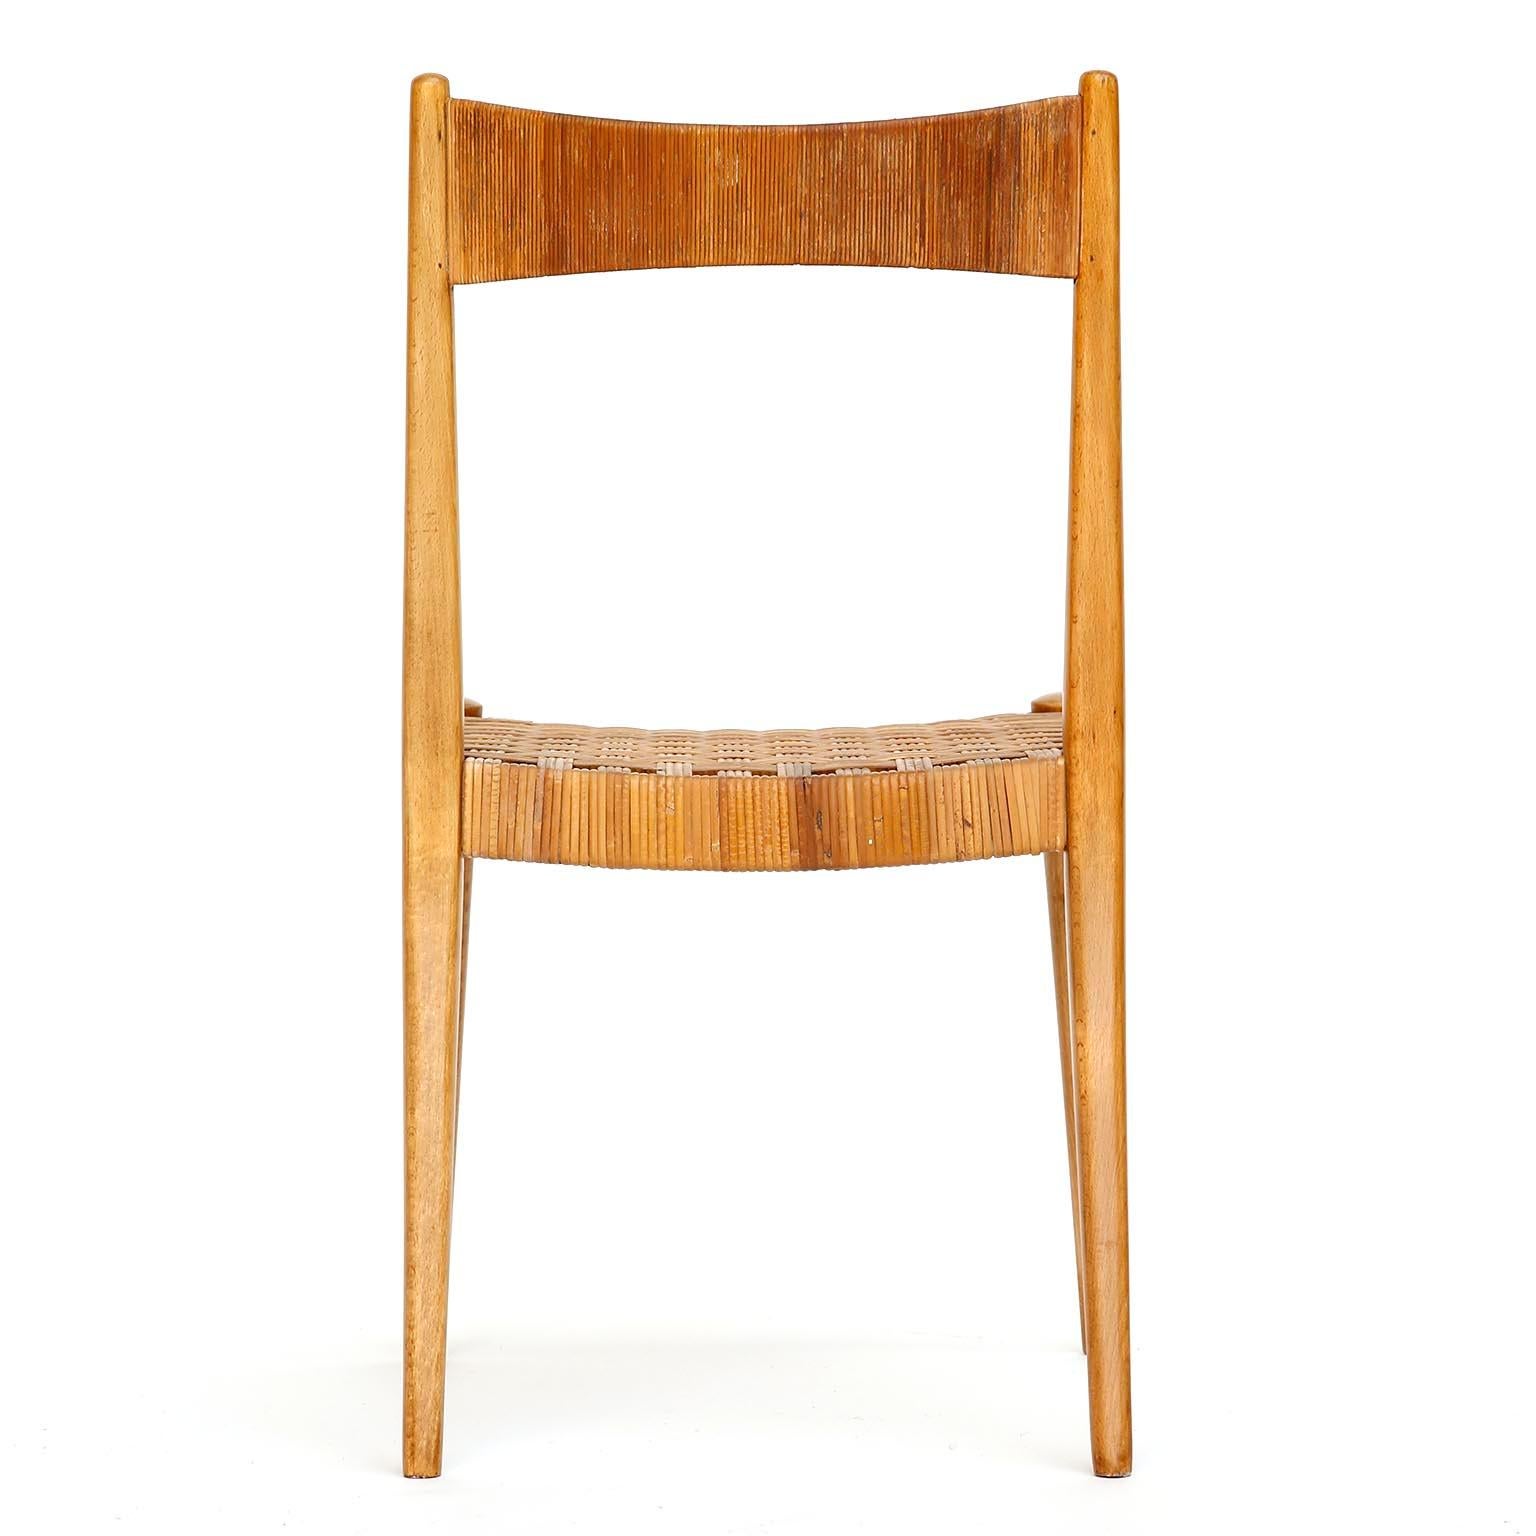 Four Anna-Lülja Praun Chairs, Wood Wicker Cane, 1950s For Sale 6